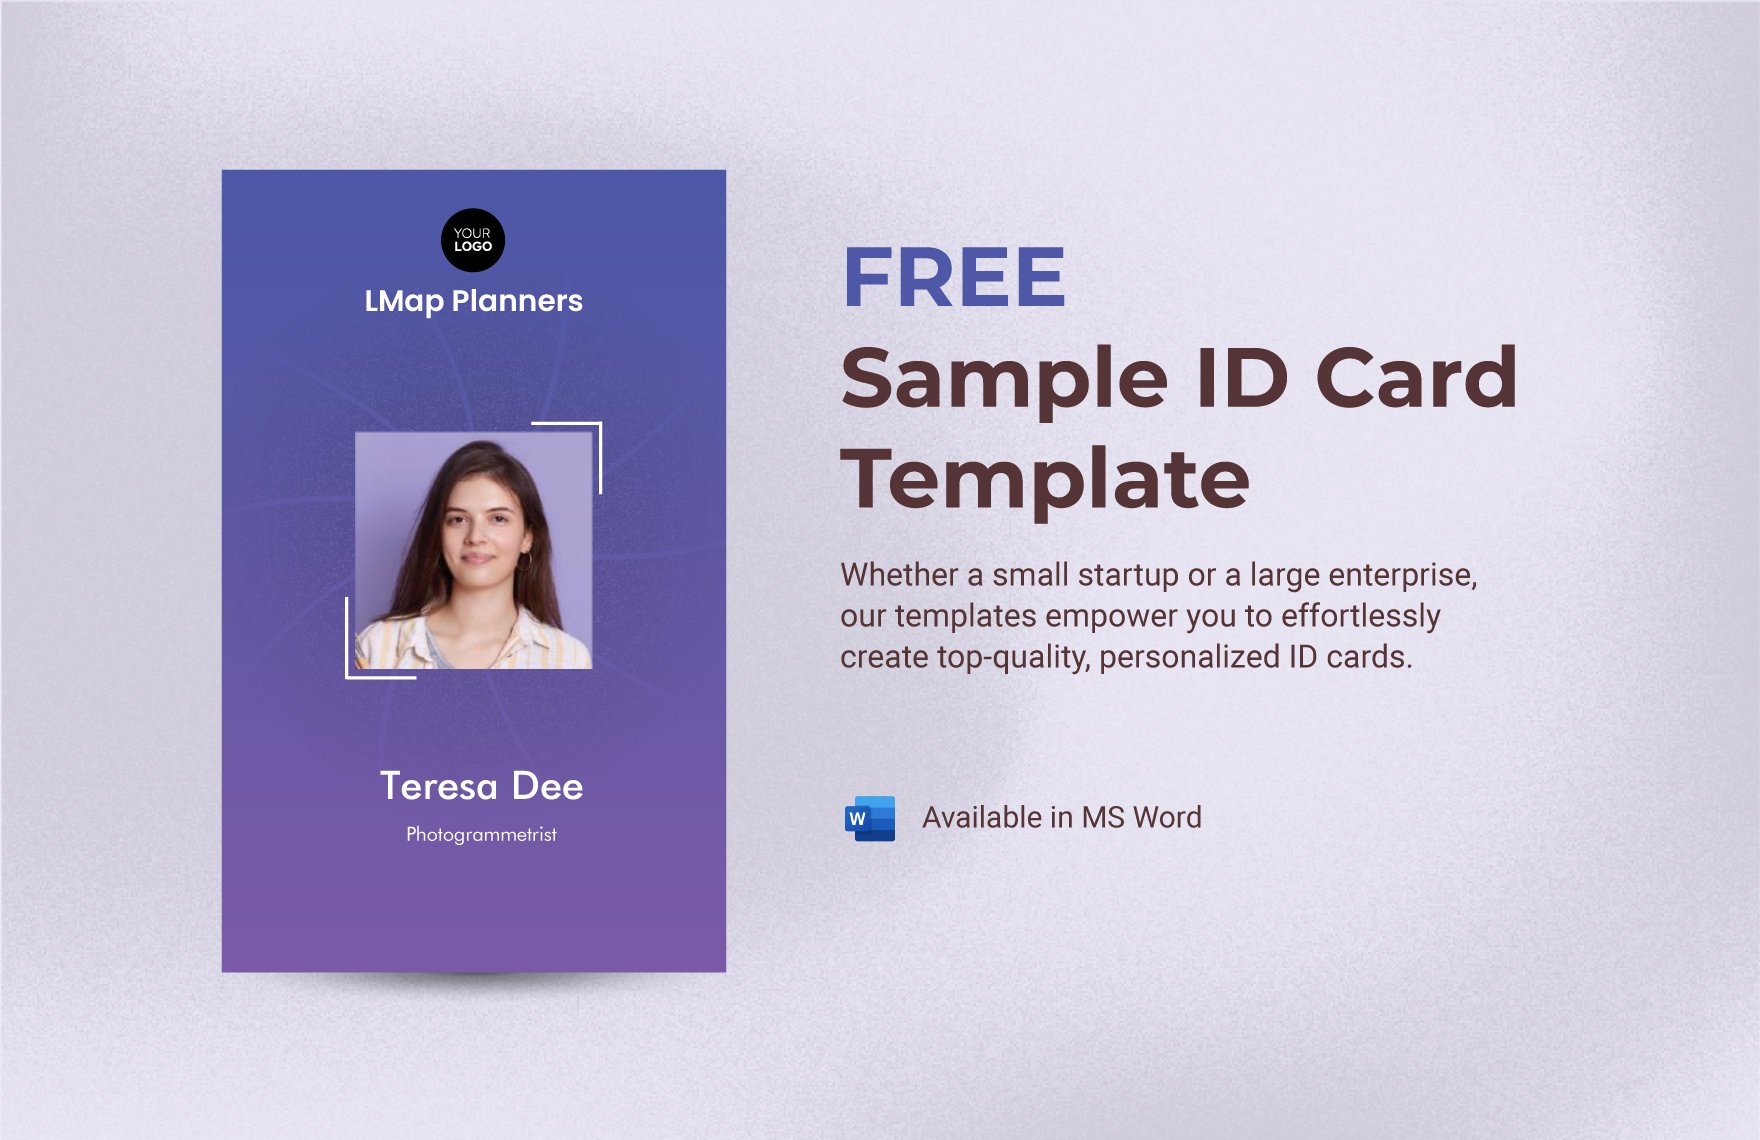 Sample ID Card Template